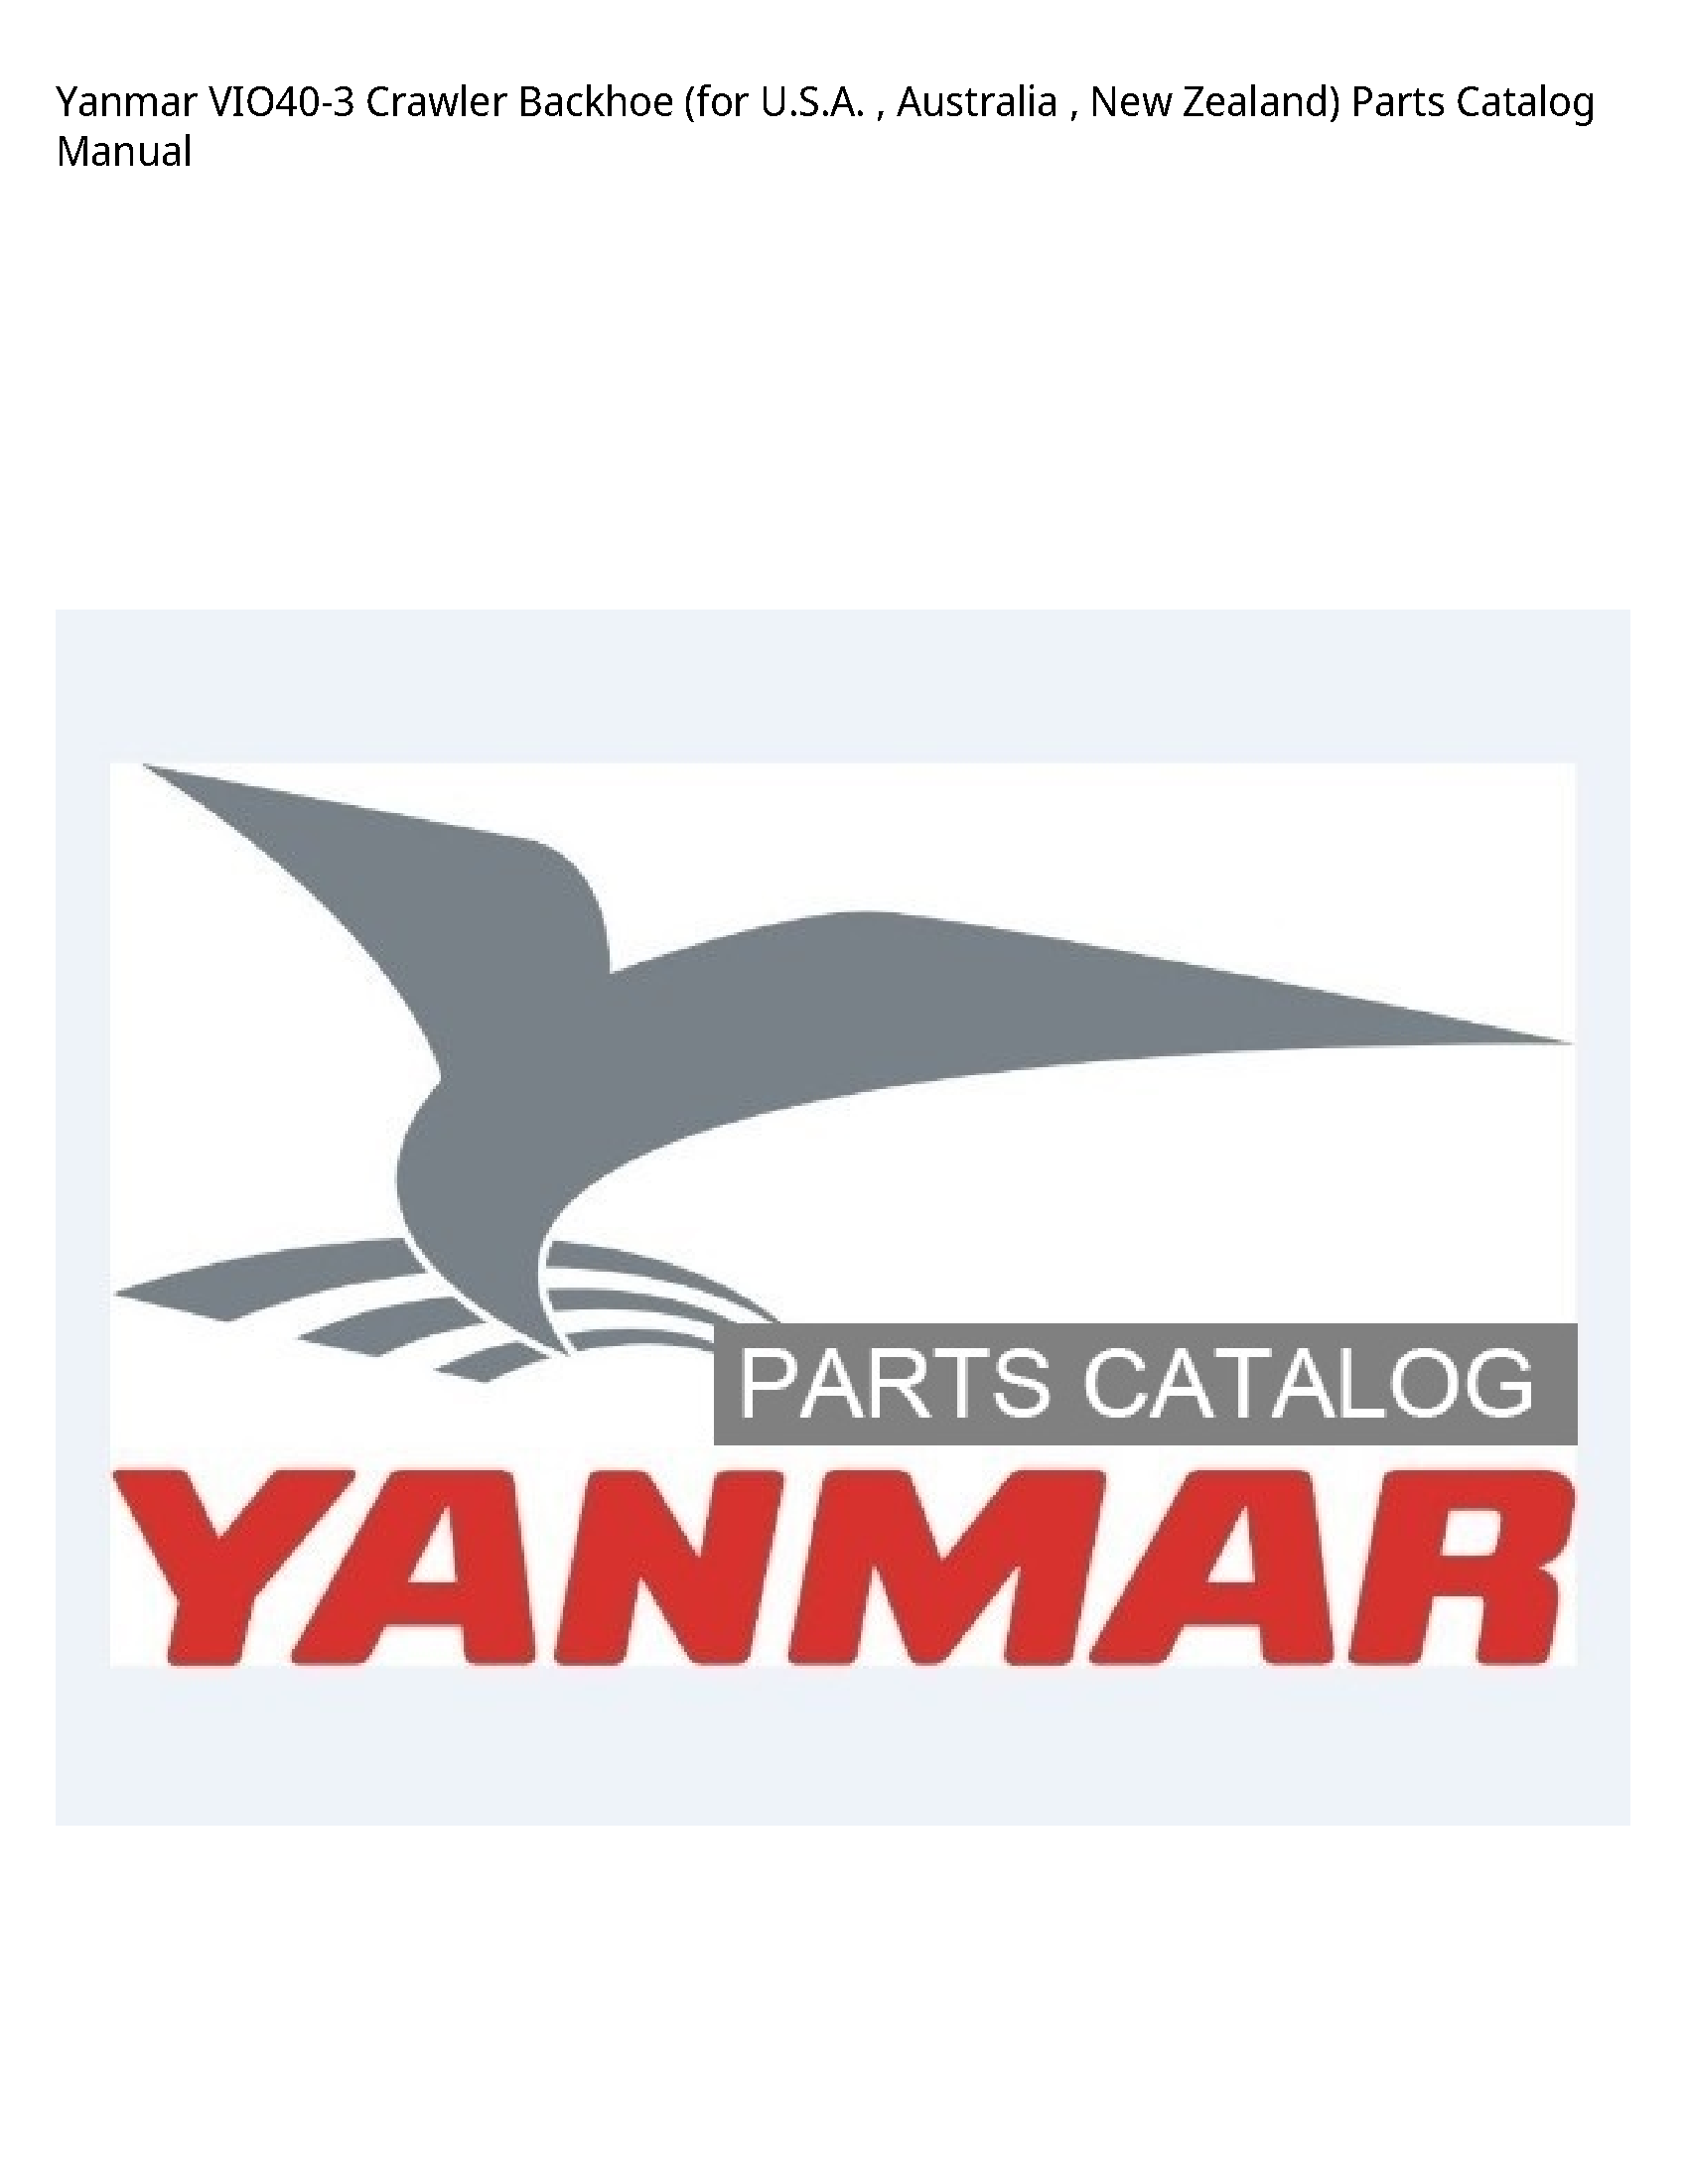 Yanmar VIO40-3 Crawler Backhoe (for U.S.A. Australia New Zealand) Parts Catalog manual